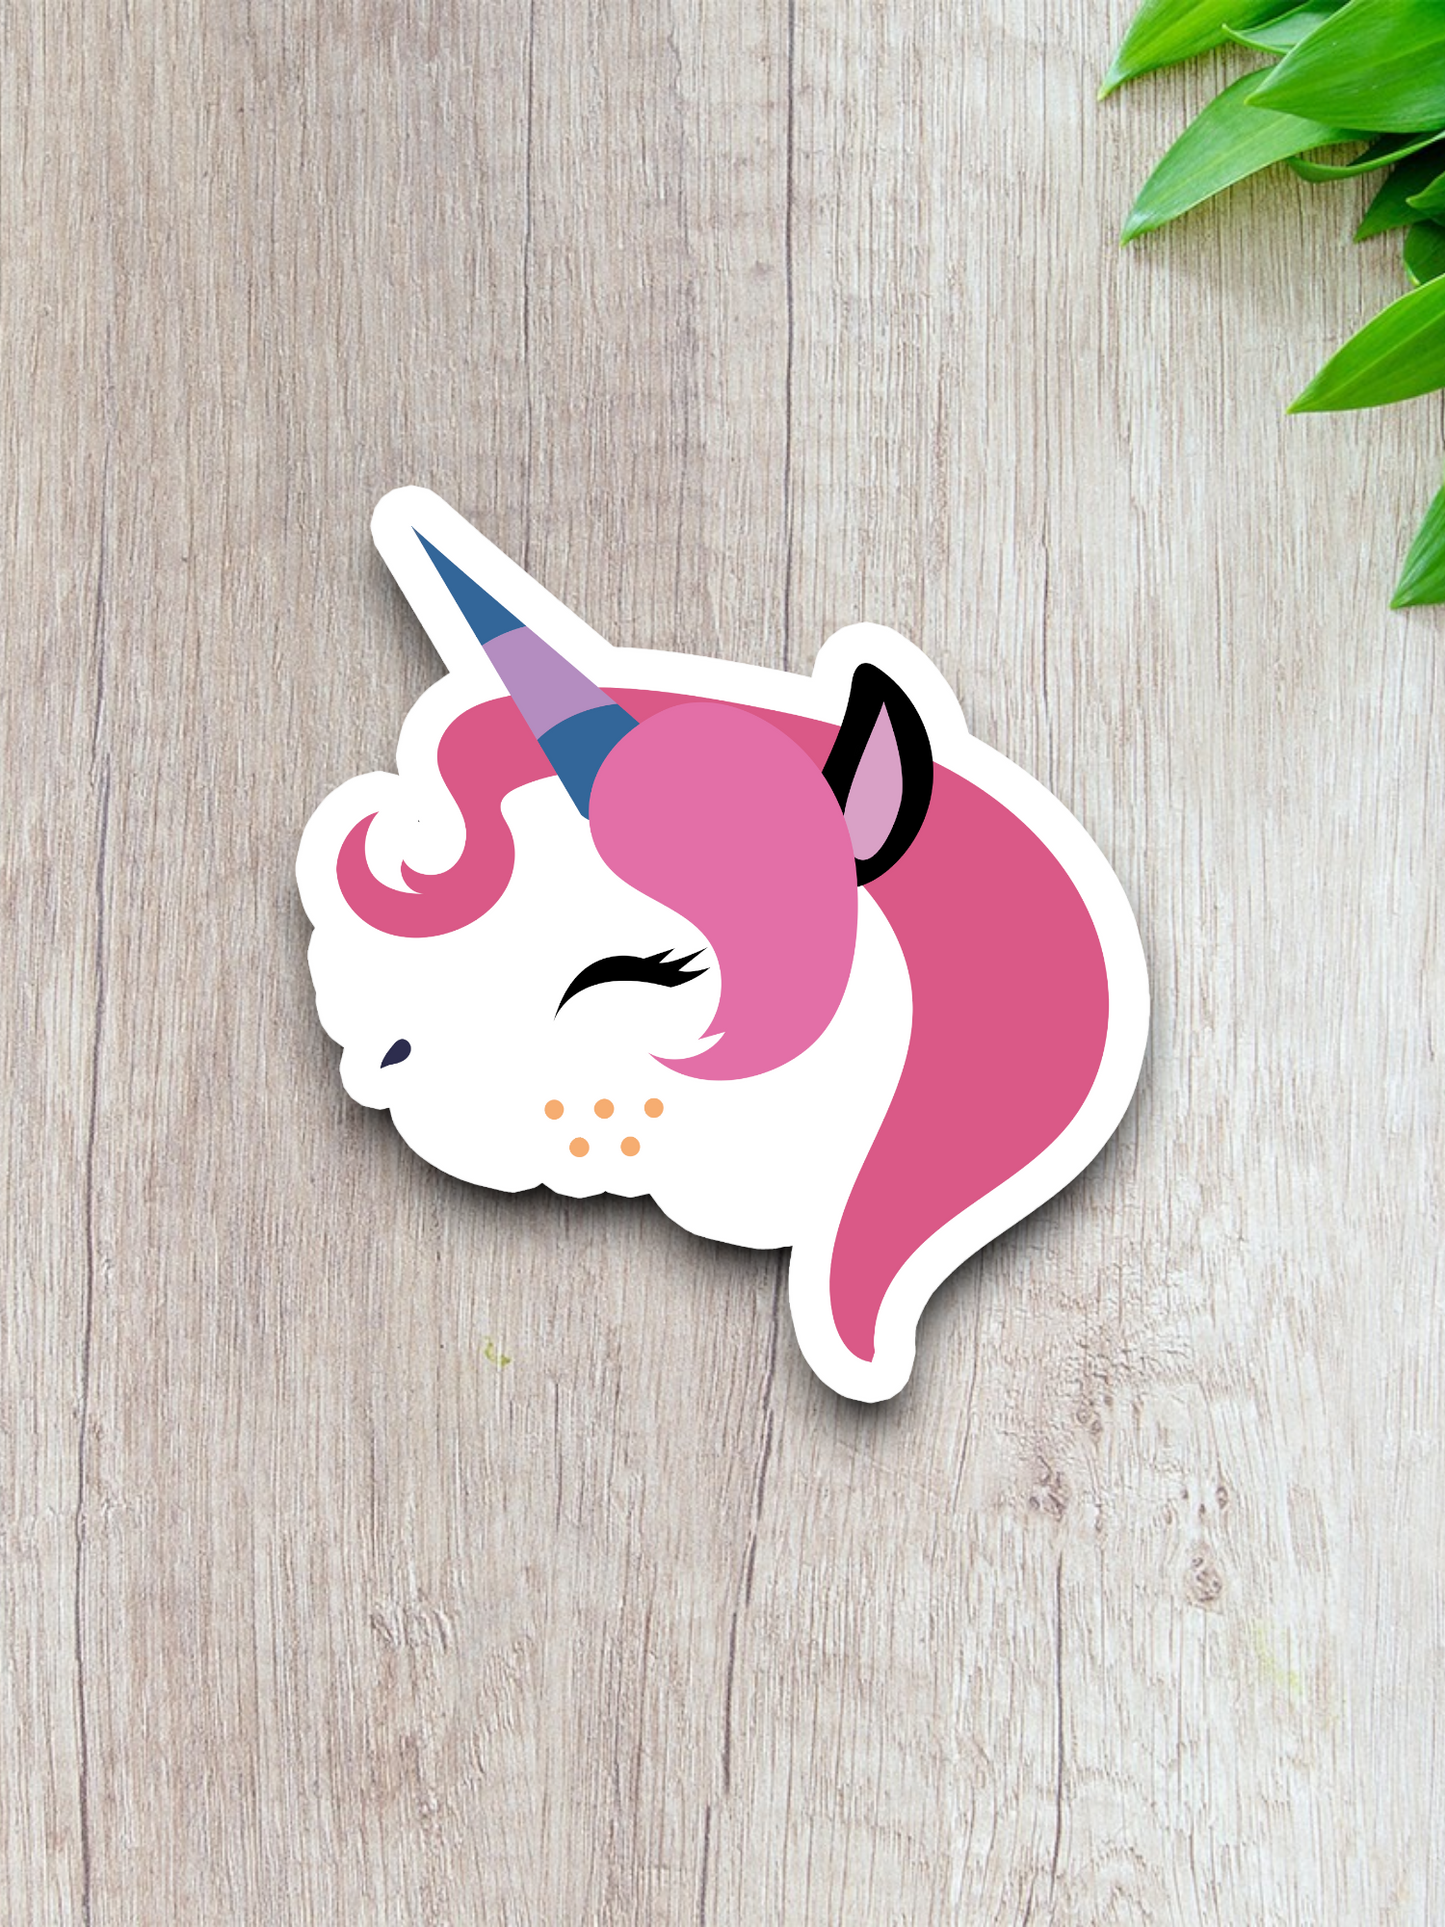 Unicorn Multi Colored Horn Version 3 Animal Sticker